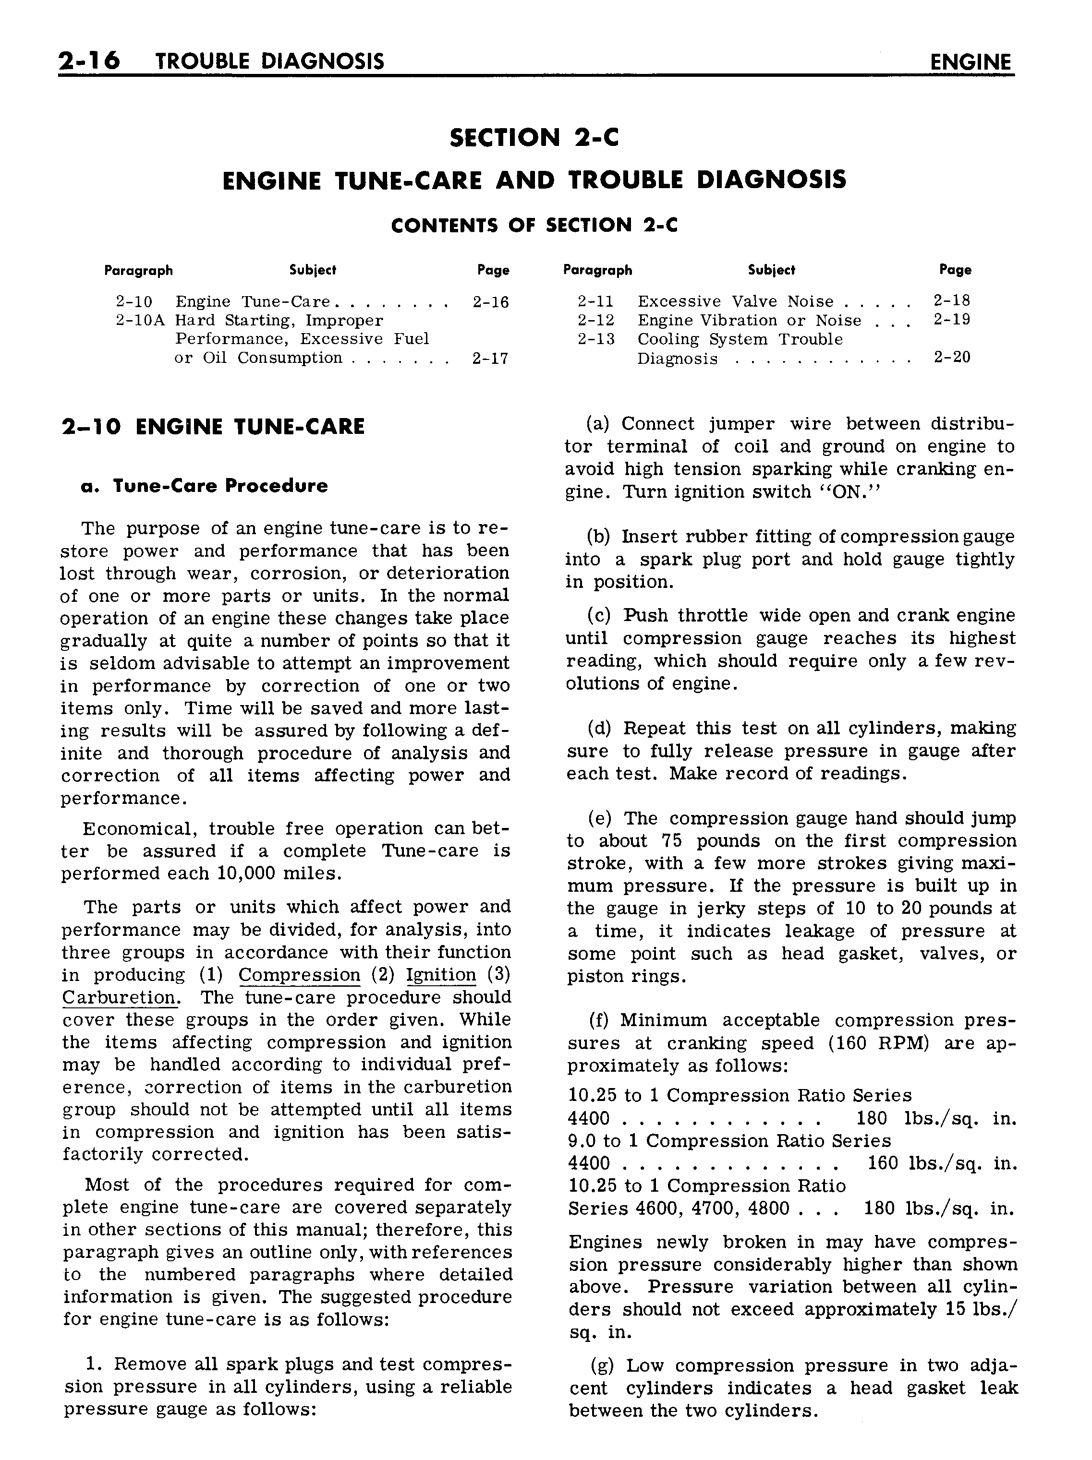 n_03 1961 Buick Shop Manual - Engine-016-016.jpg